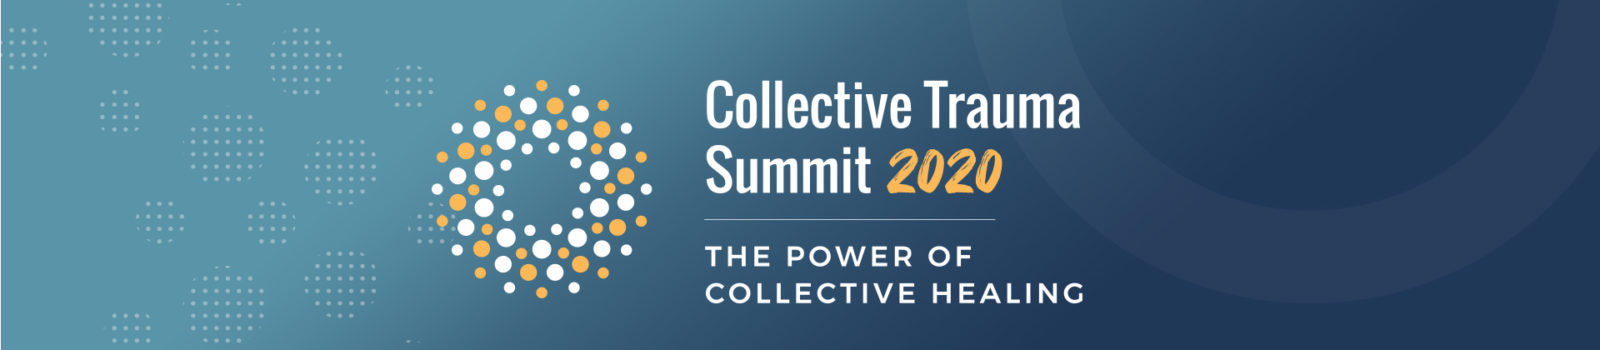 Collective Trauma Summit 2020 logo